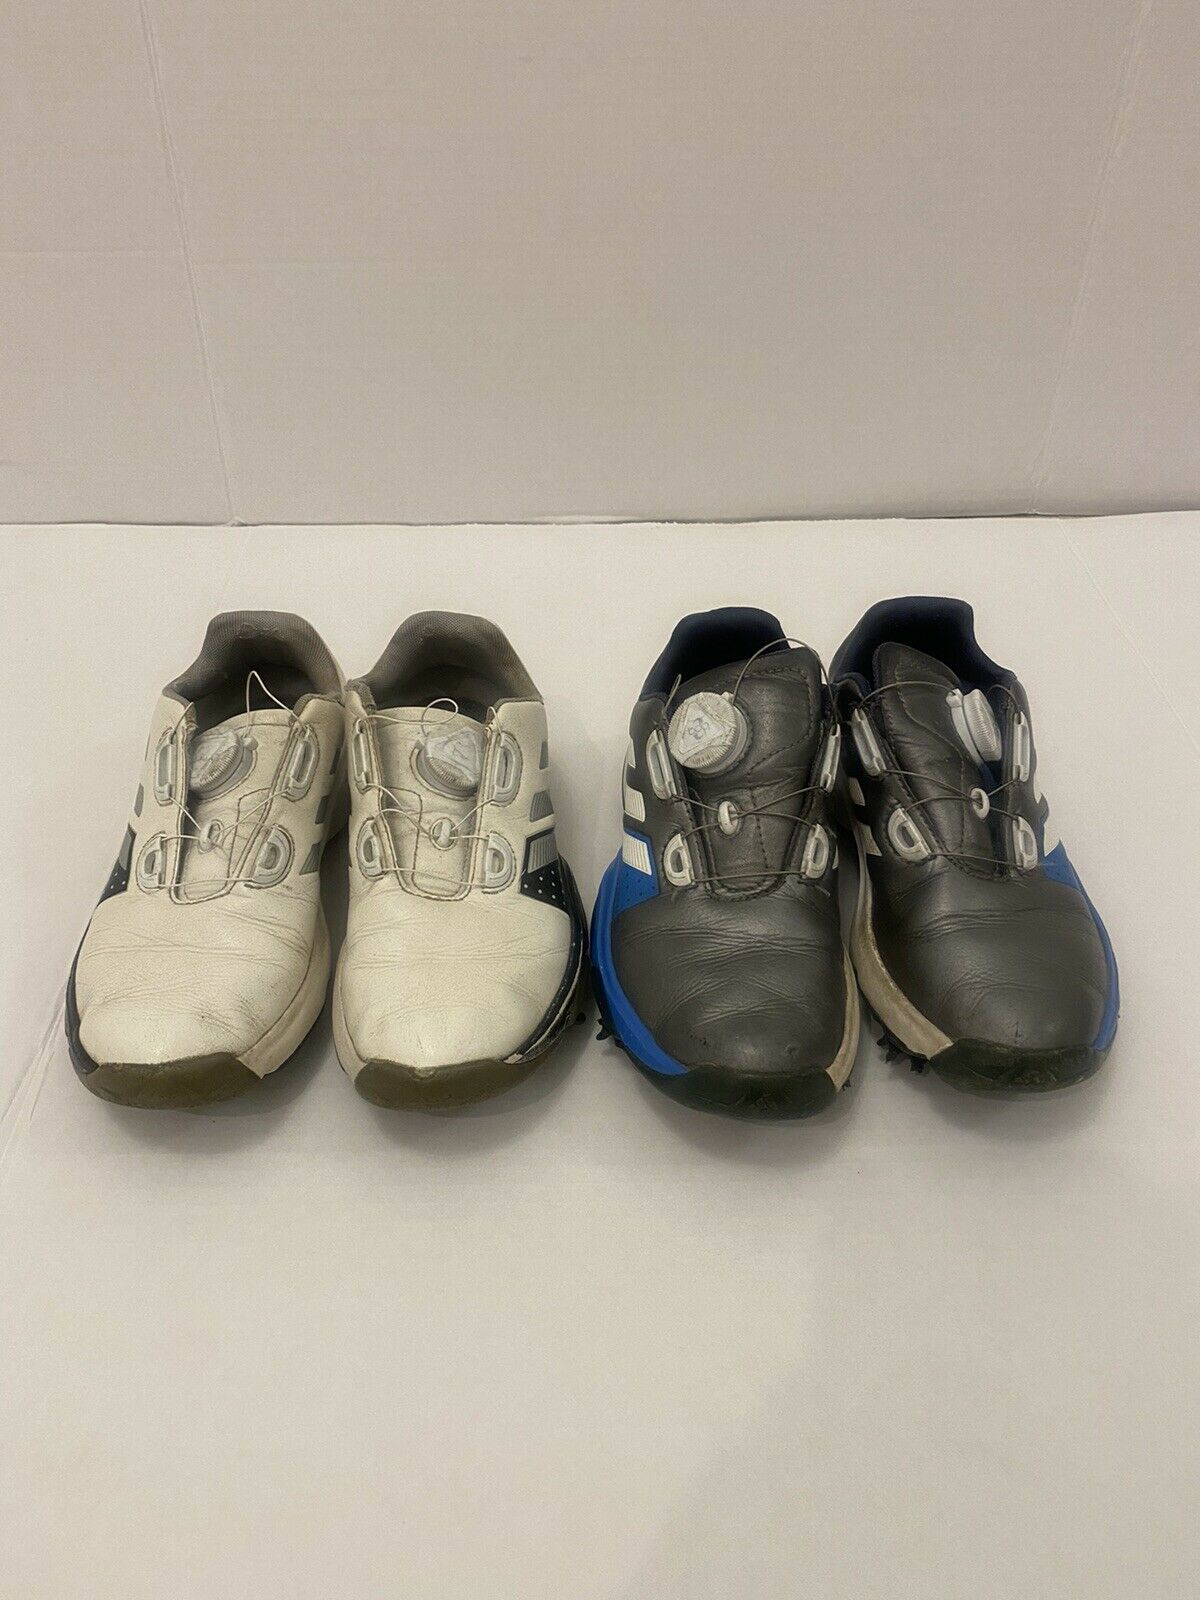 Used (on sale) Adidas Kids Golf 2.5 Shoes